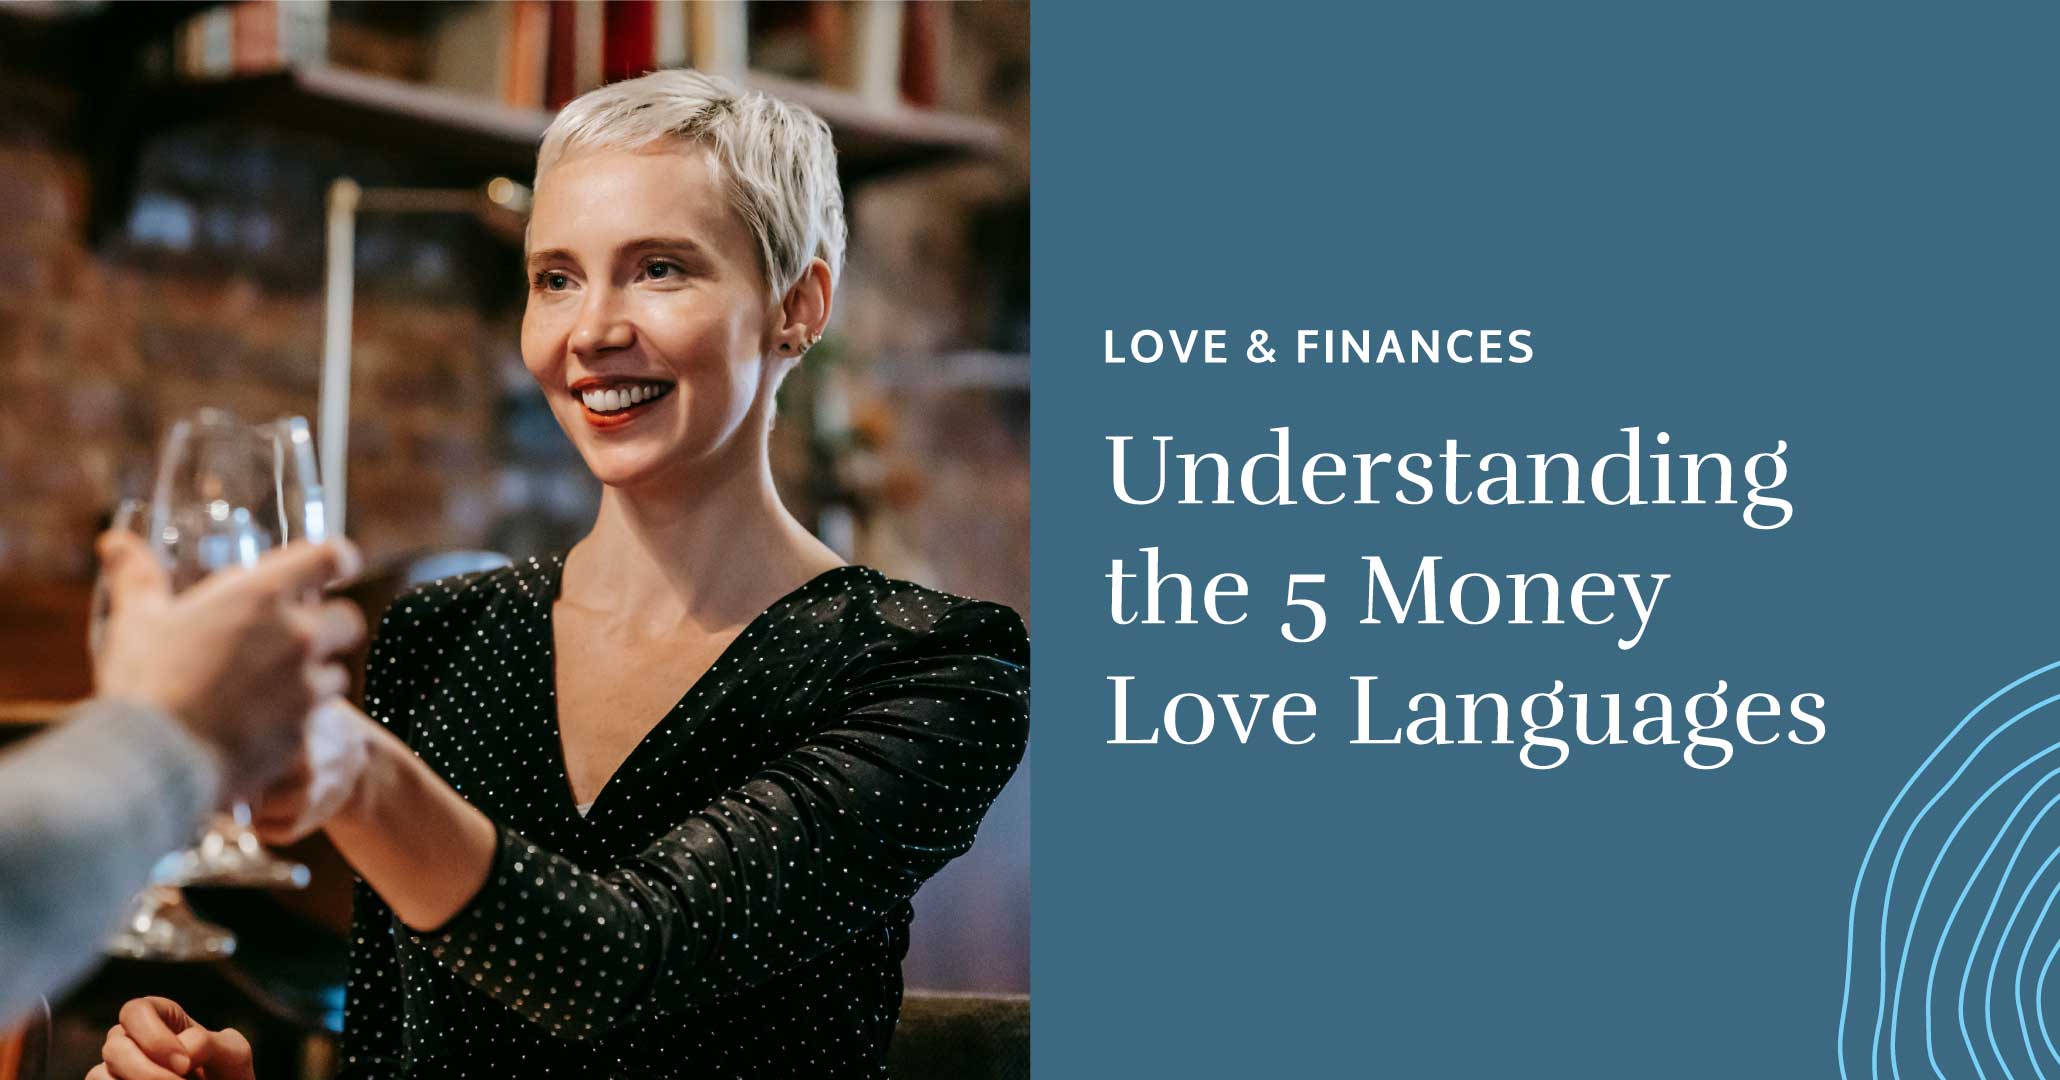 Love & Finances: Understanding the 5 Money Love Languages